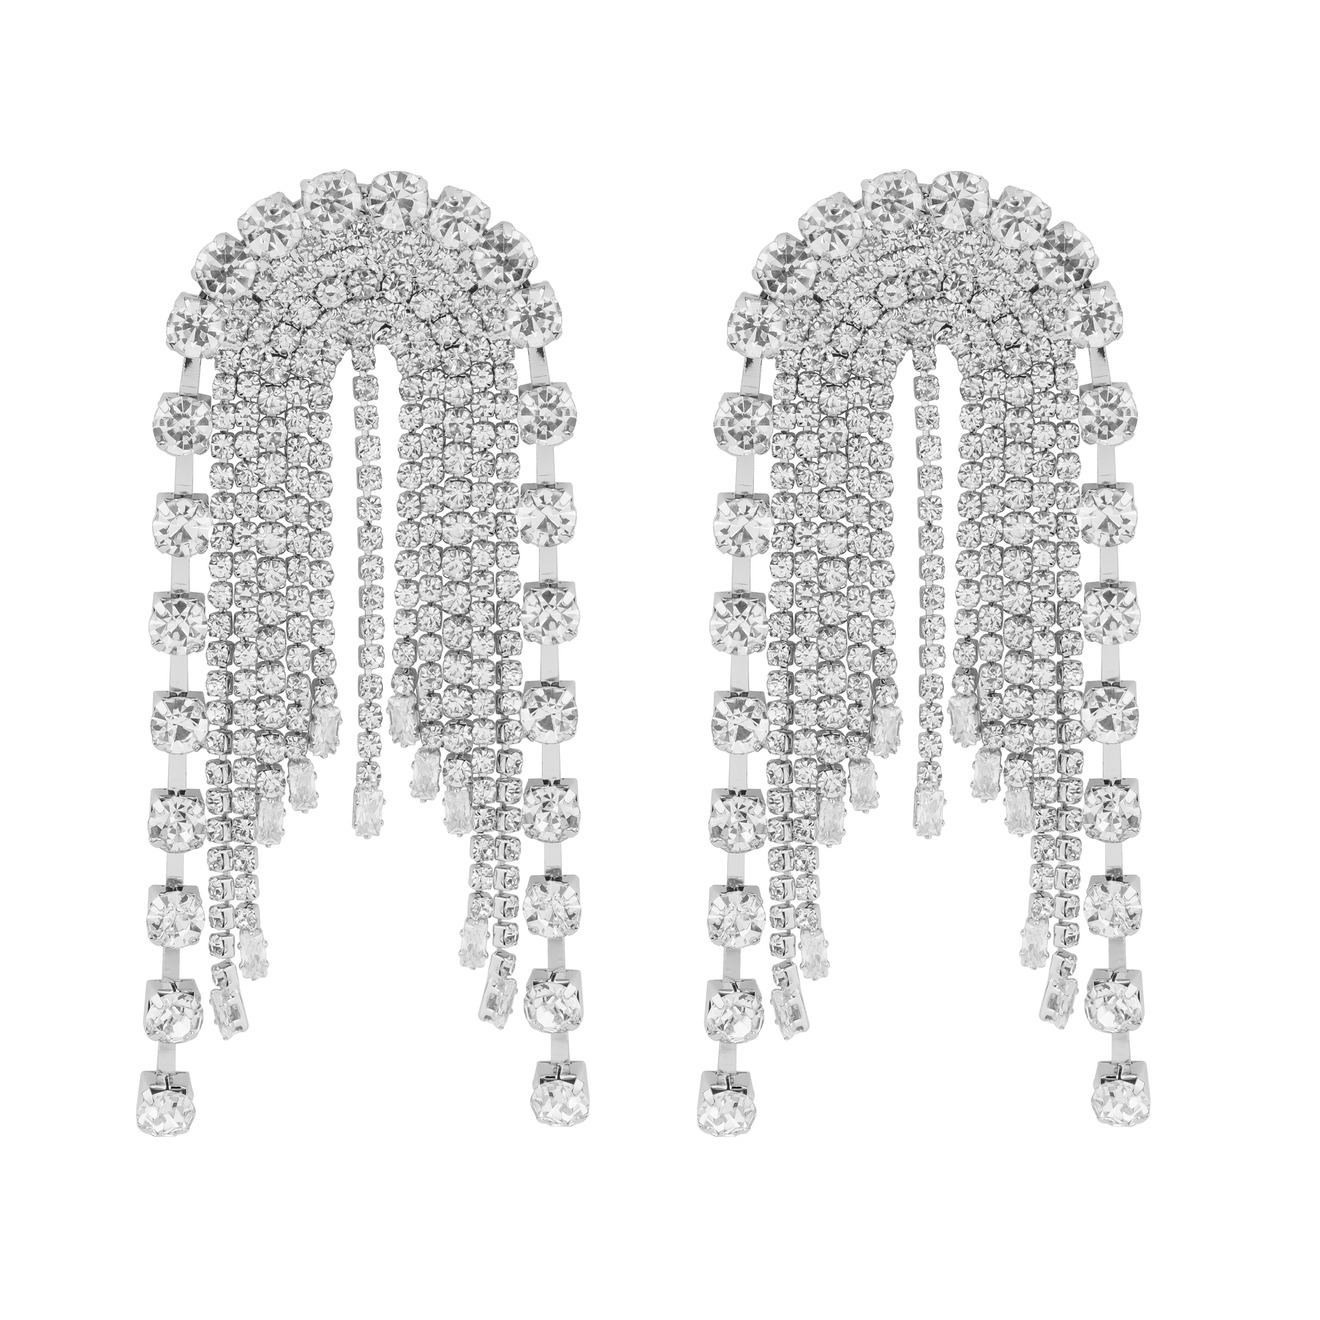 Herald Percy Серебристые серьги с кристаллами herald percy серебристые серьги с кристаллами багетами